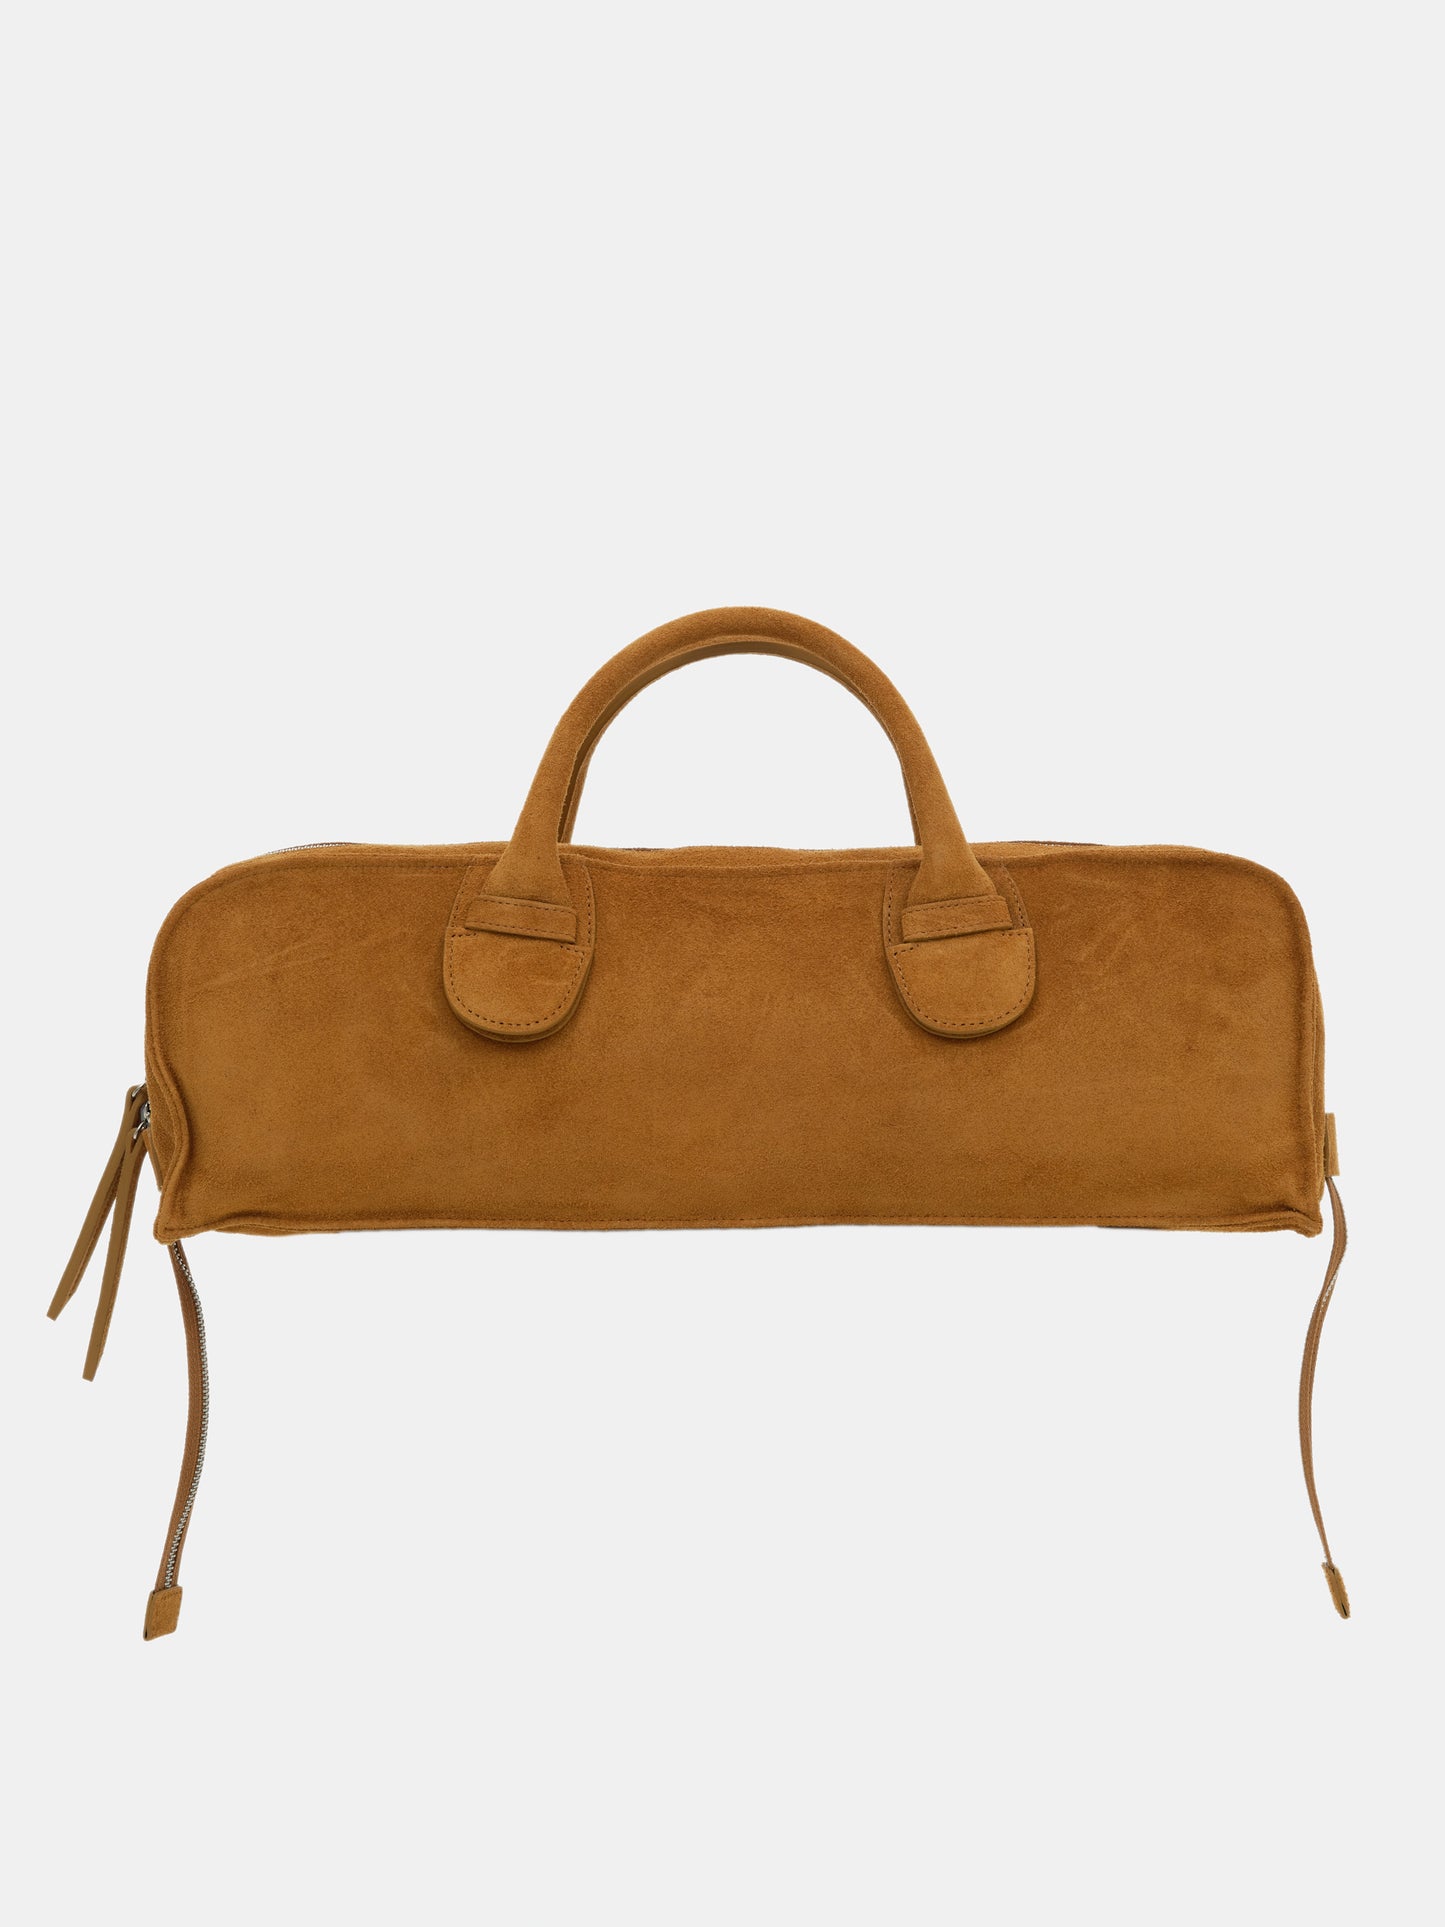 Leather Suede Rectangular Handbag, Camel